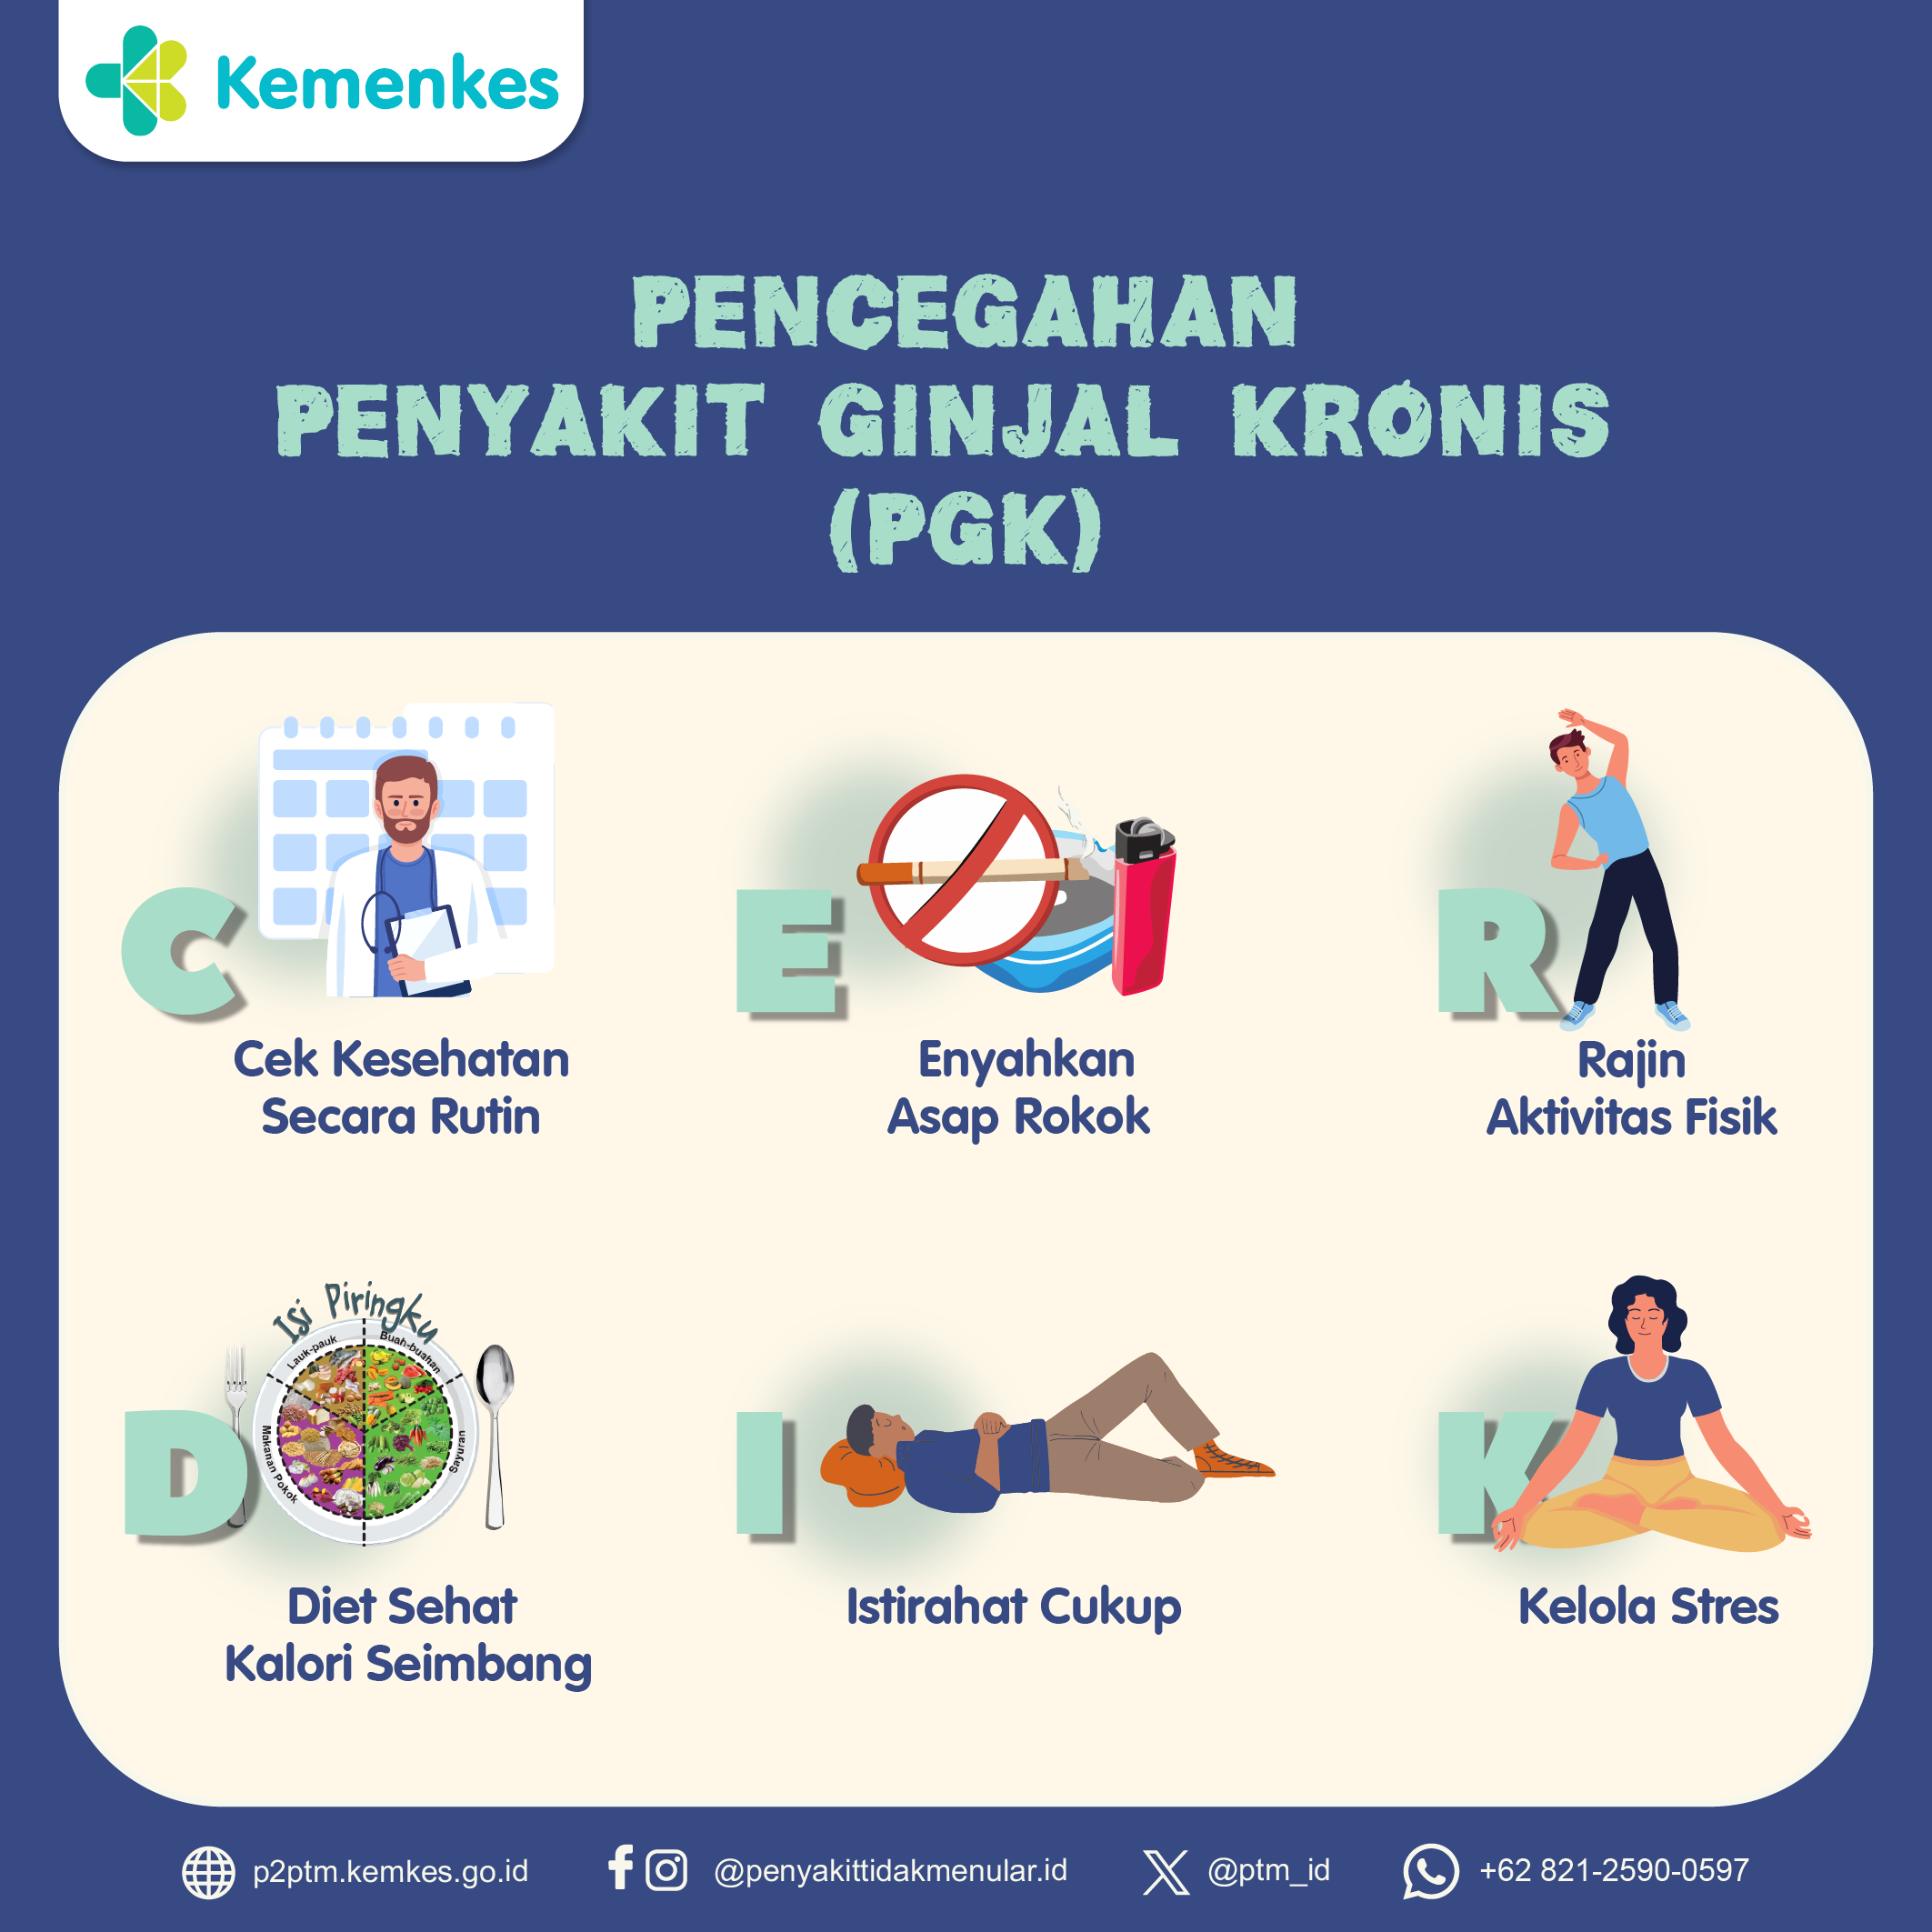 Pencegahan Penyakit Ginjal Kronis (PGK)